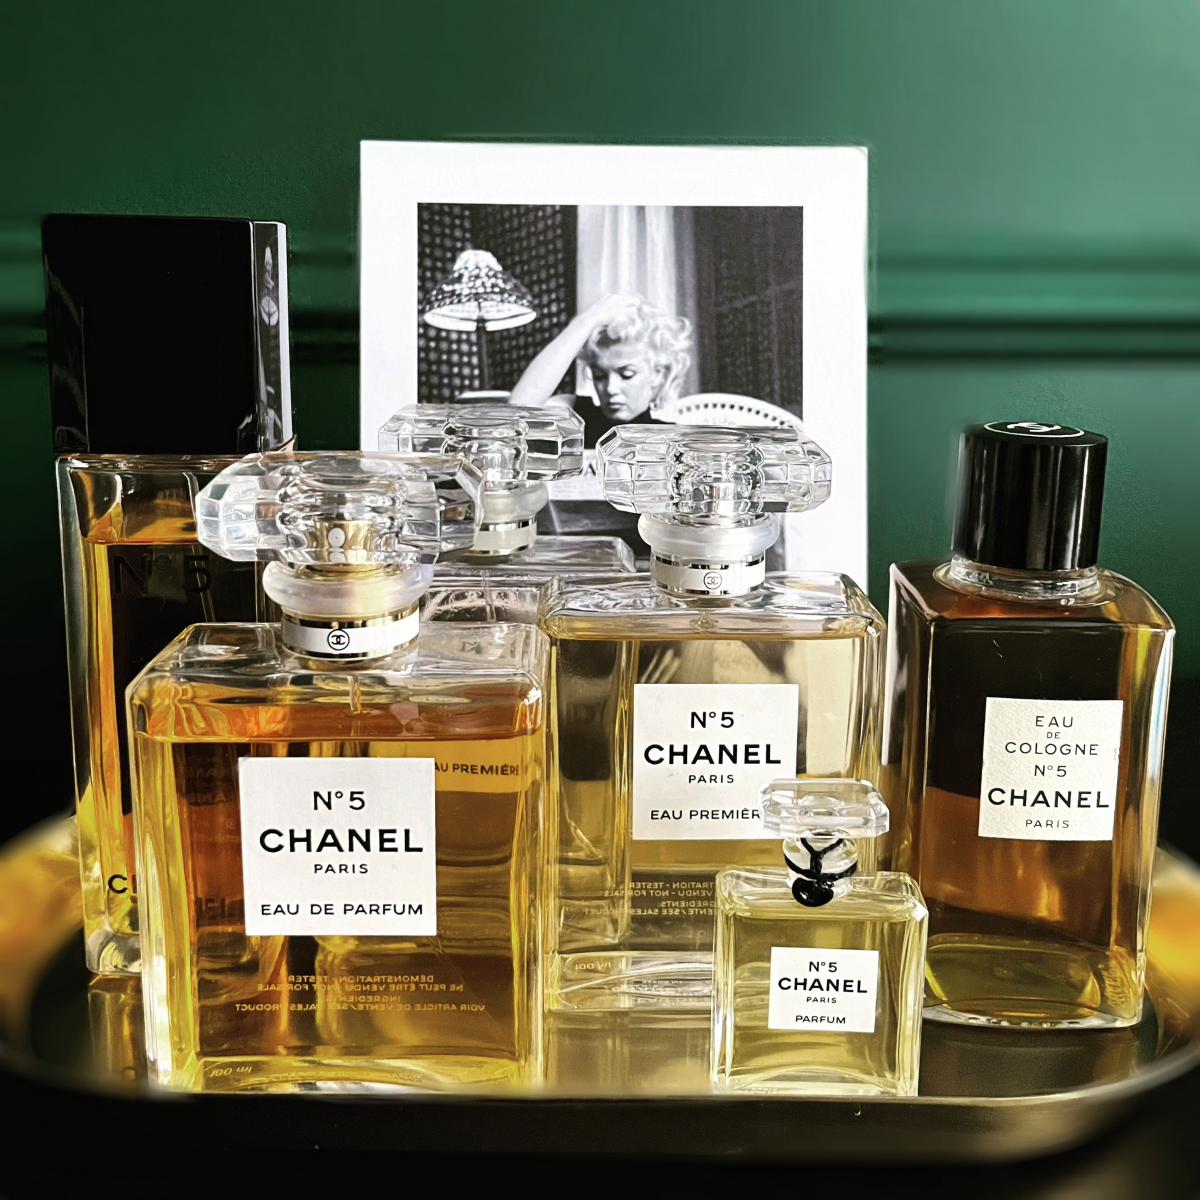 Chanel No 5 Eau de Cologne Chanel perfume a fragrance for women